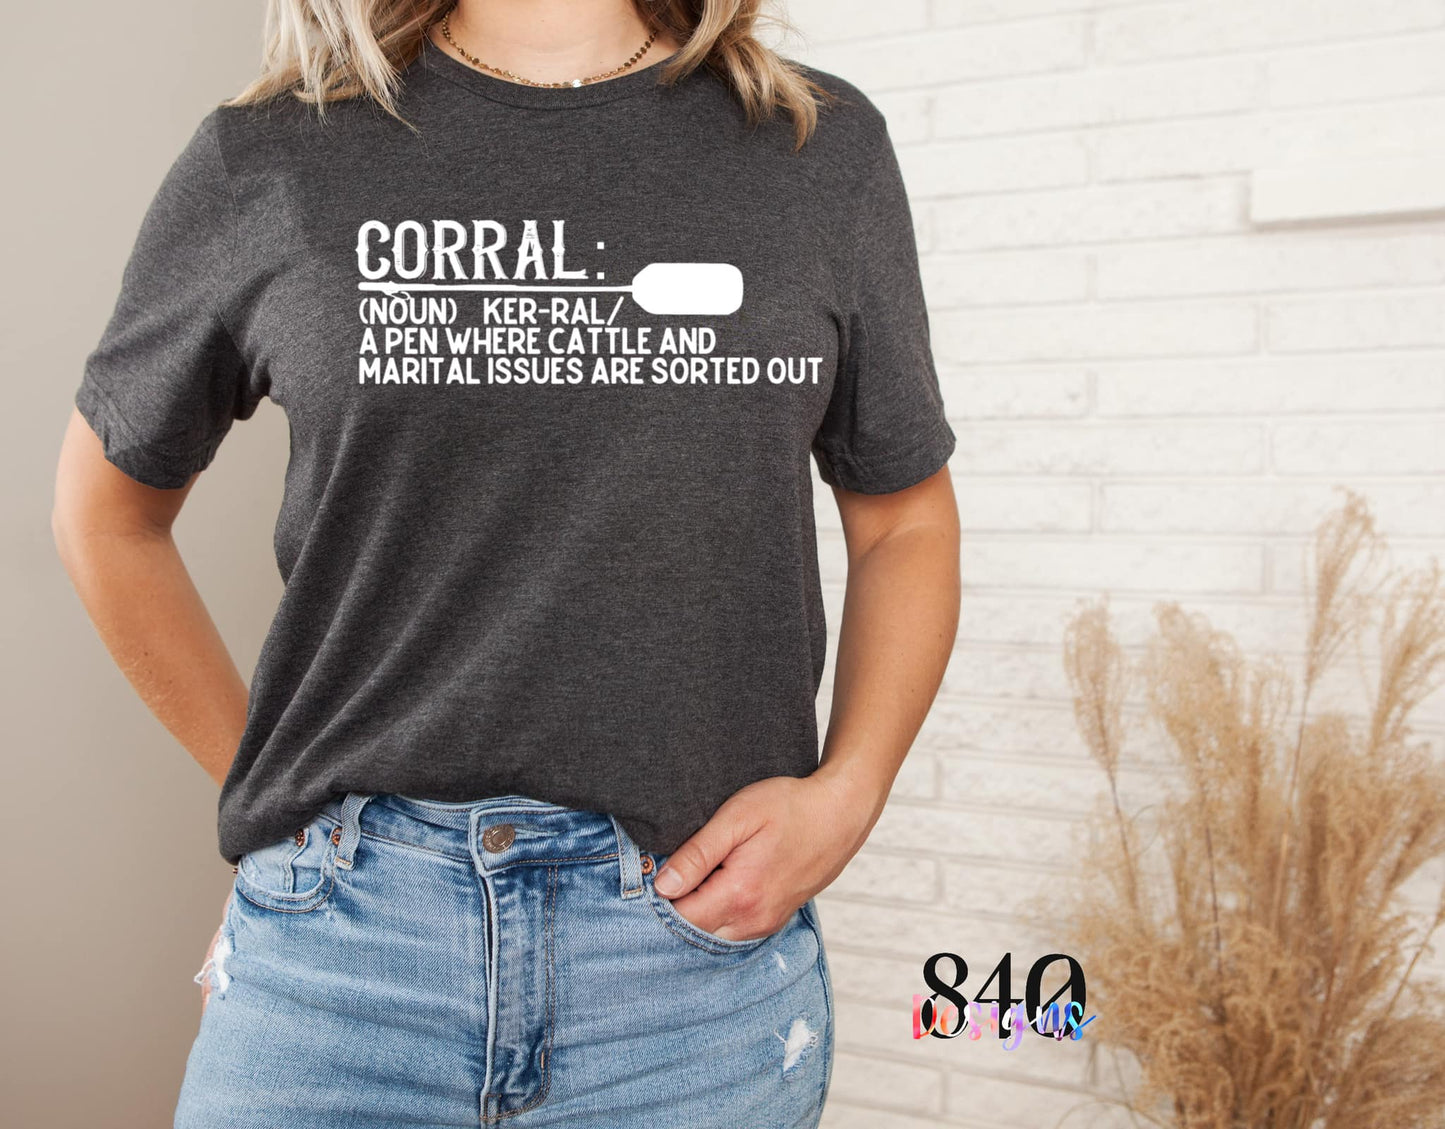 Corral Definition - 840 EXCLUSIVE